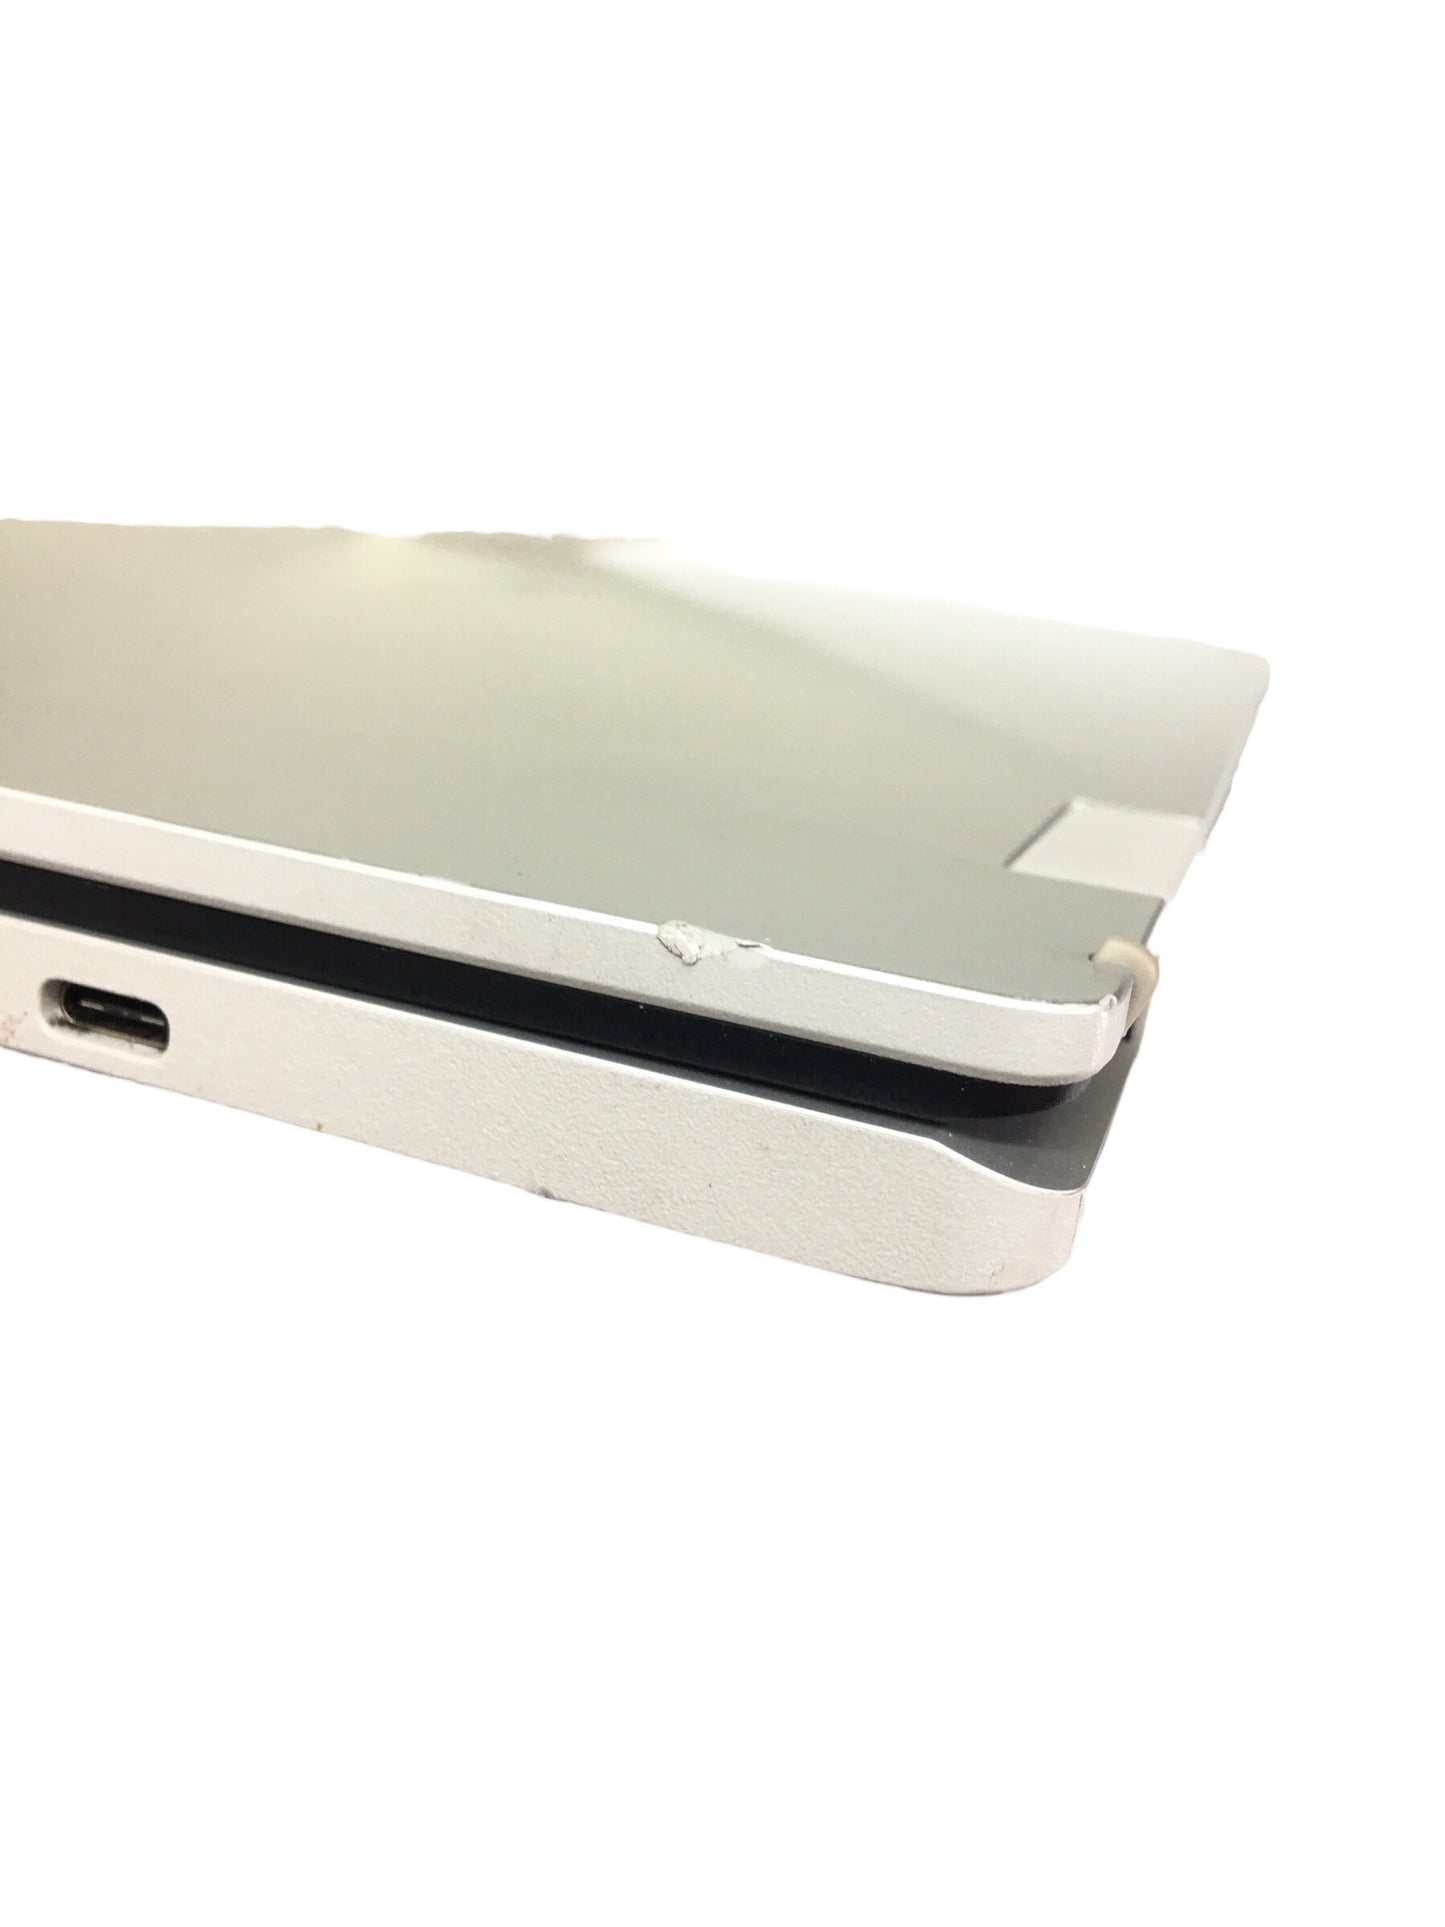 Asus CXB170CK Chromebook (4GB RAM, 32GB HDD, INTEL CELERON N4500 1.1GHz, CHROME OS)